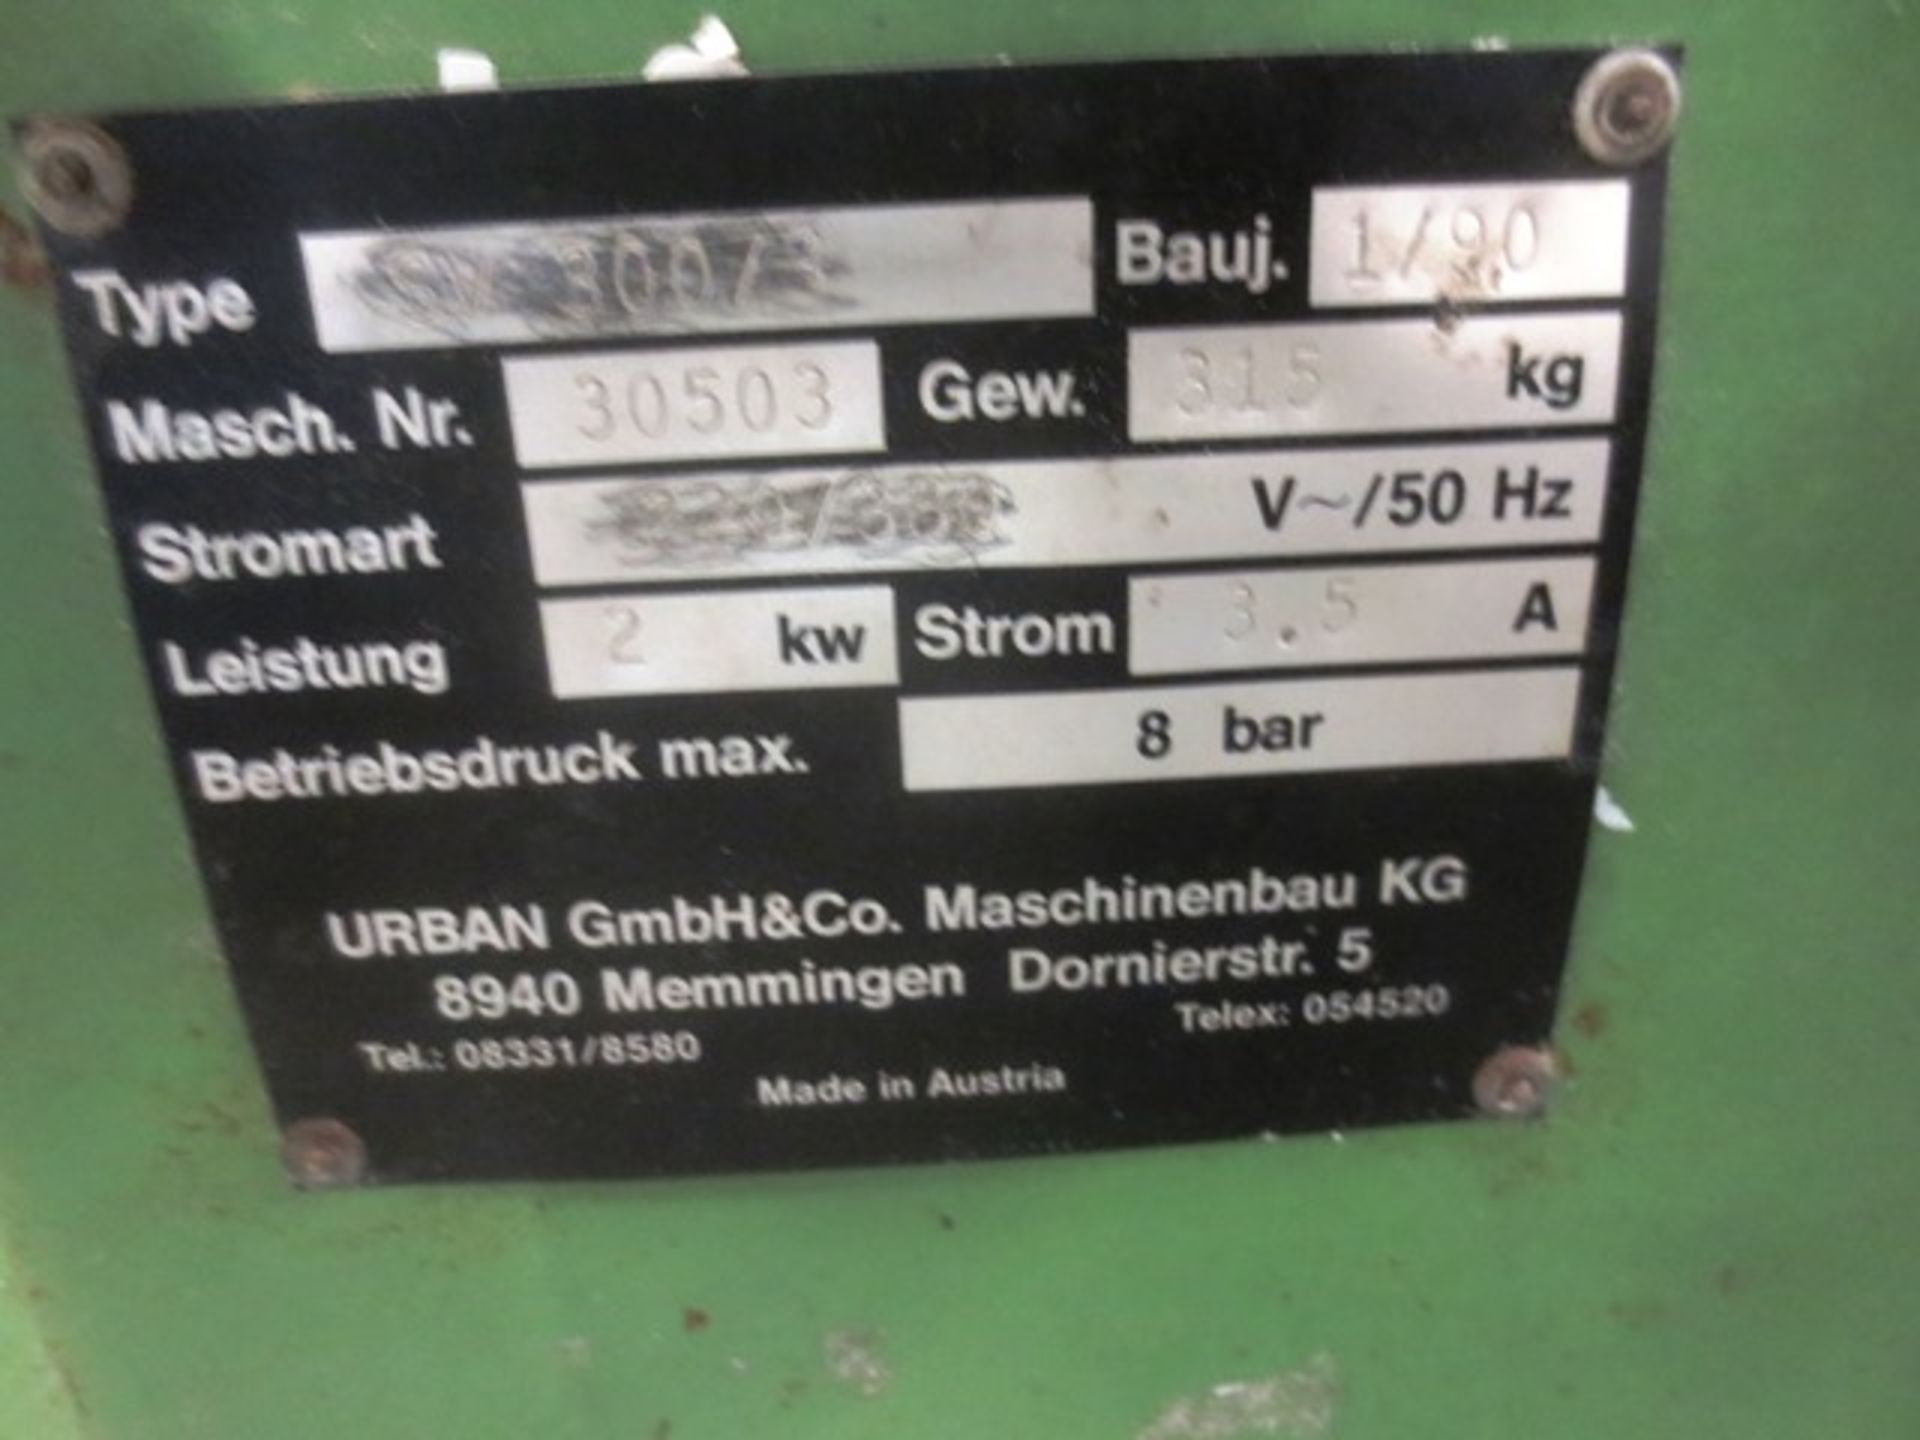 Urban SV300/3 corner cleaner, serial no: 30503 (1990) Max pressure: 8 bar, 315kg machine weight - Image 4 of 4